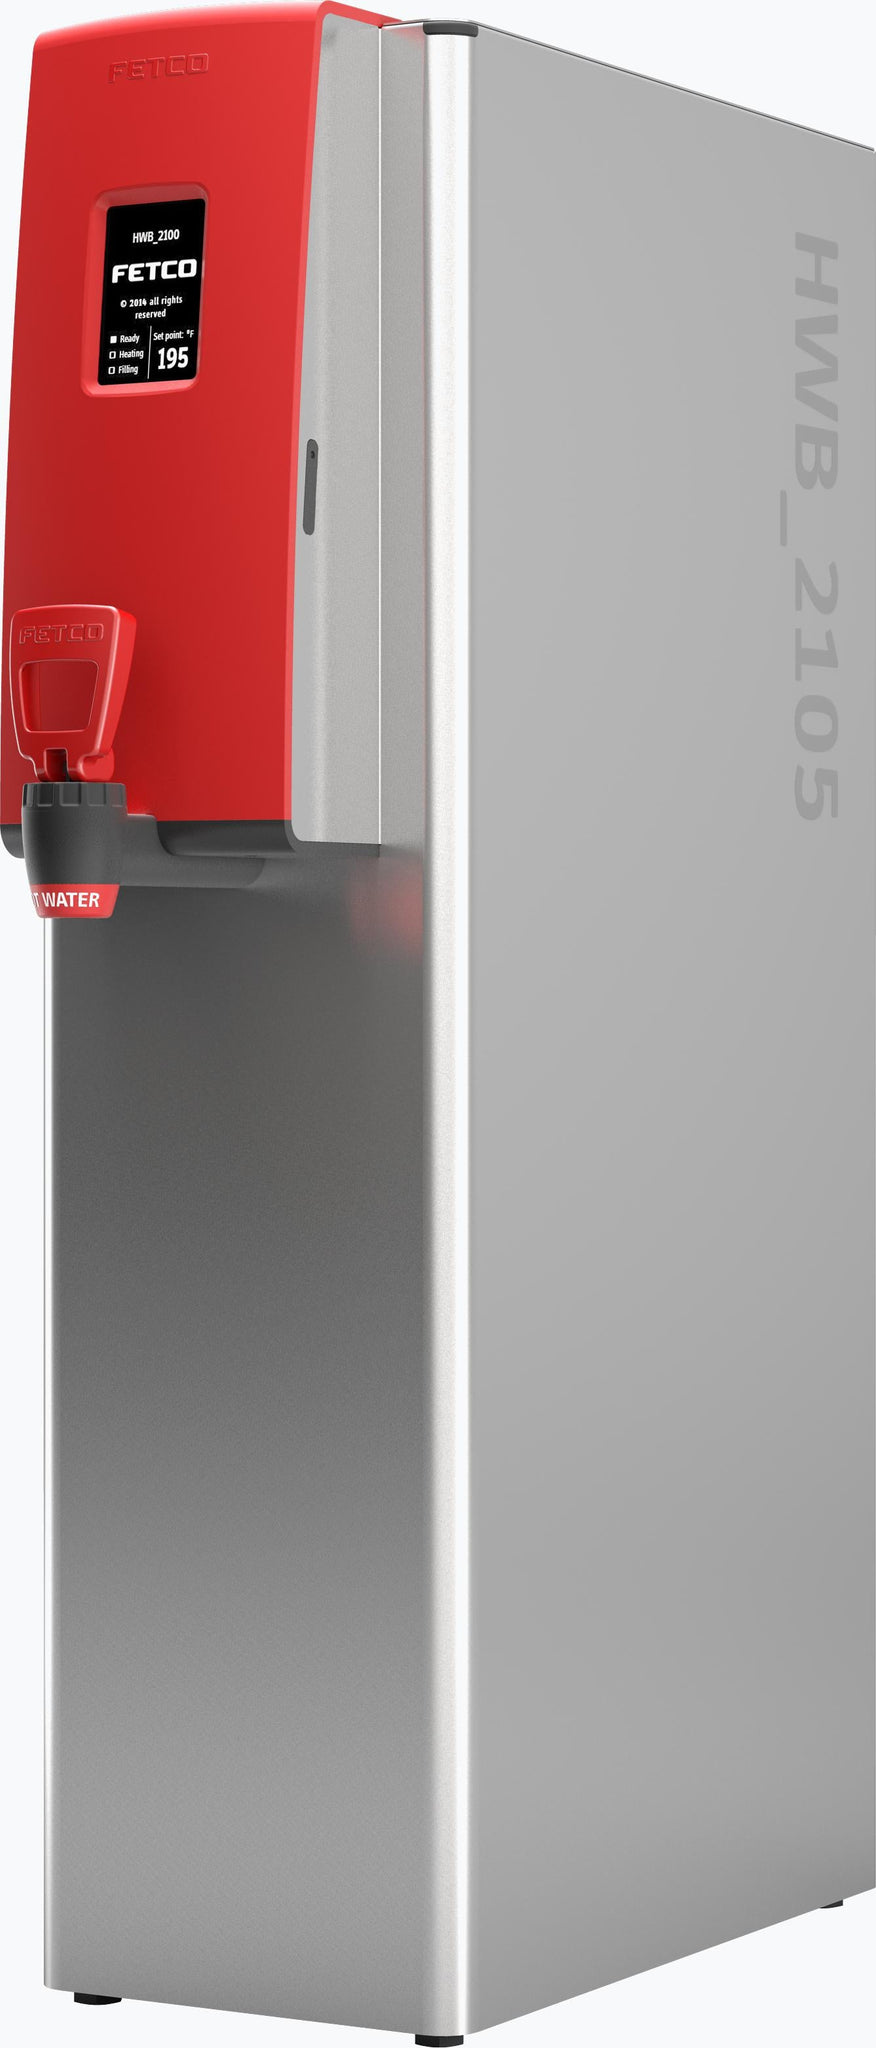 Fetco Hot Water Dispensers